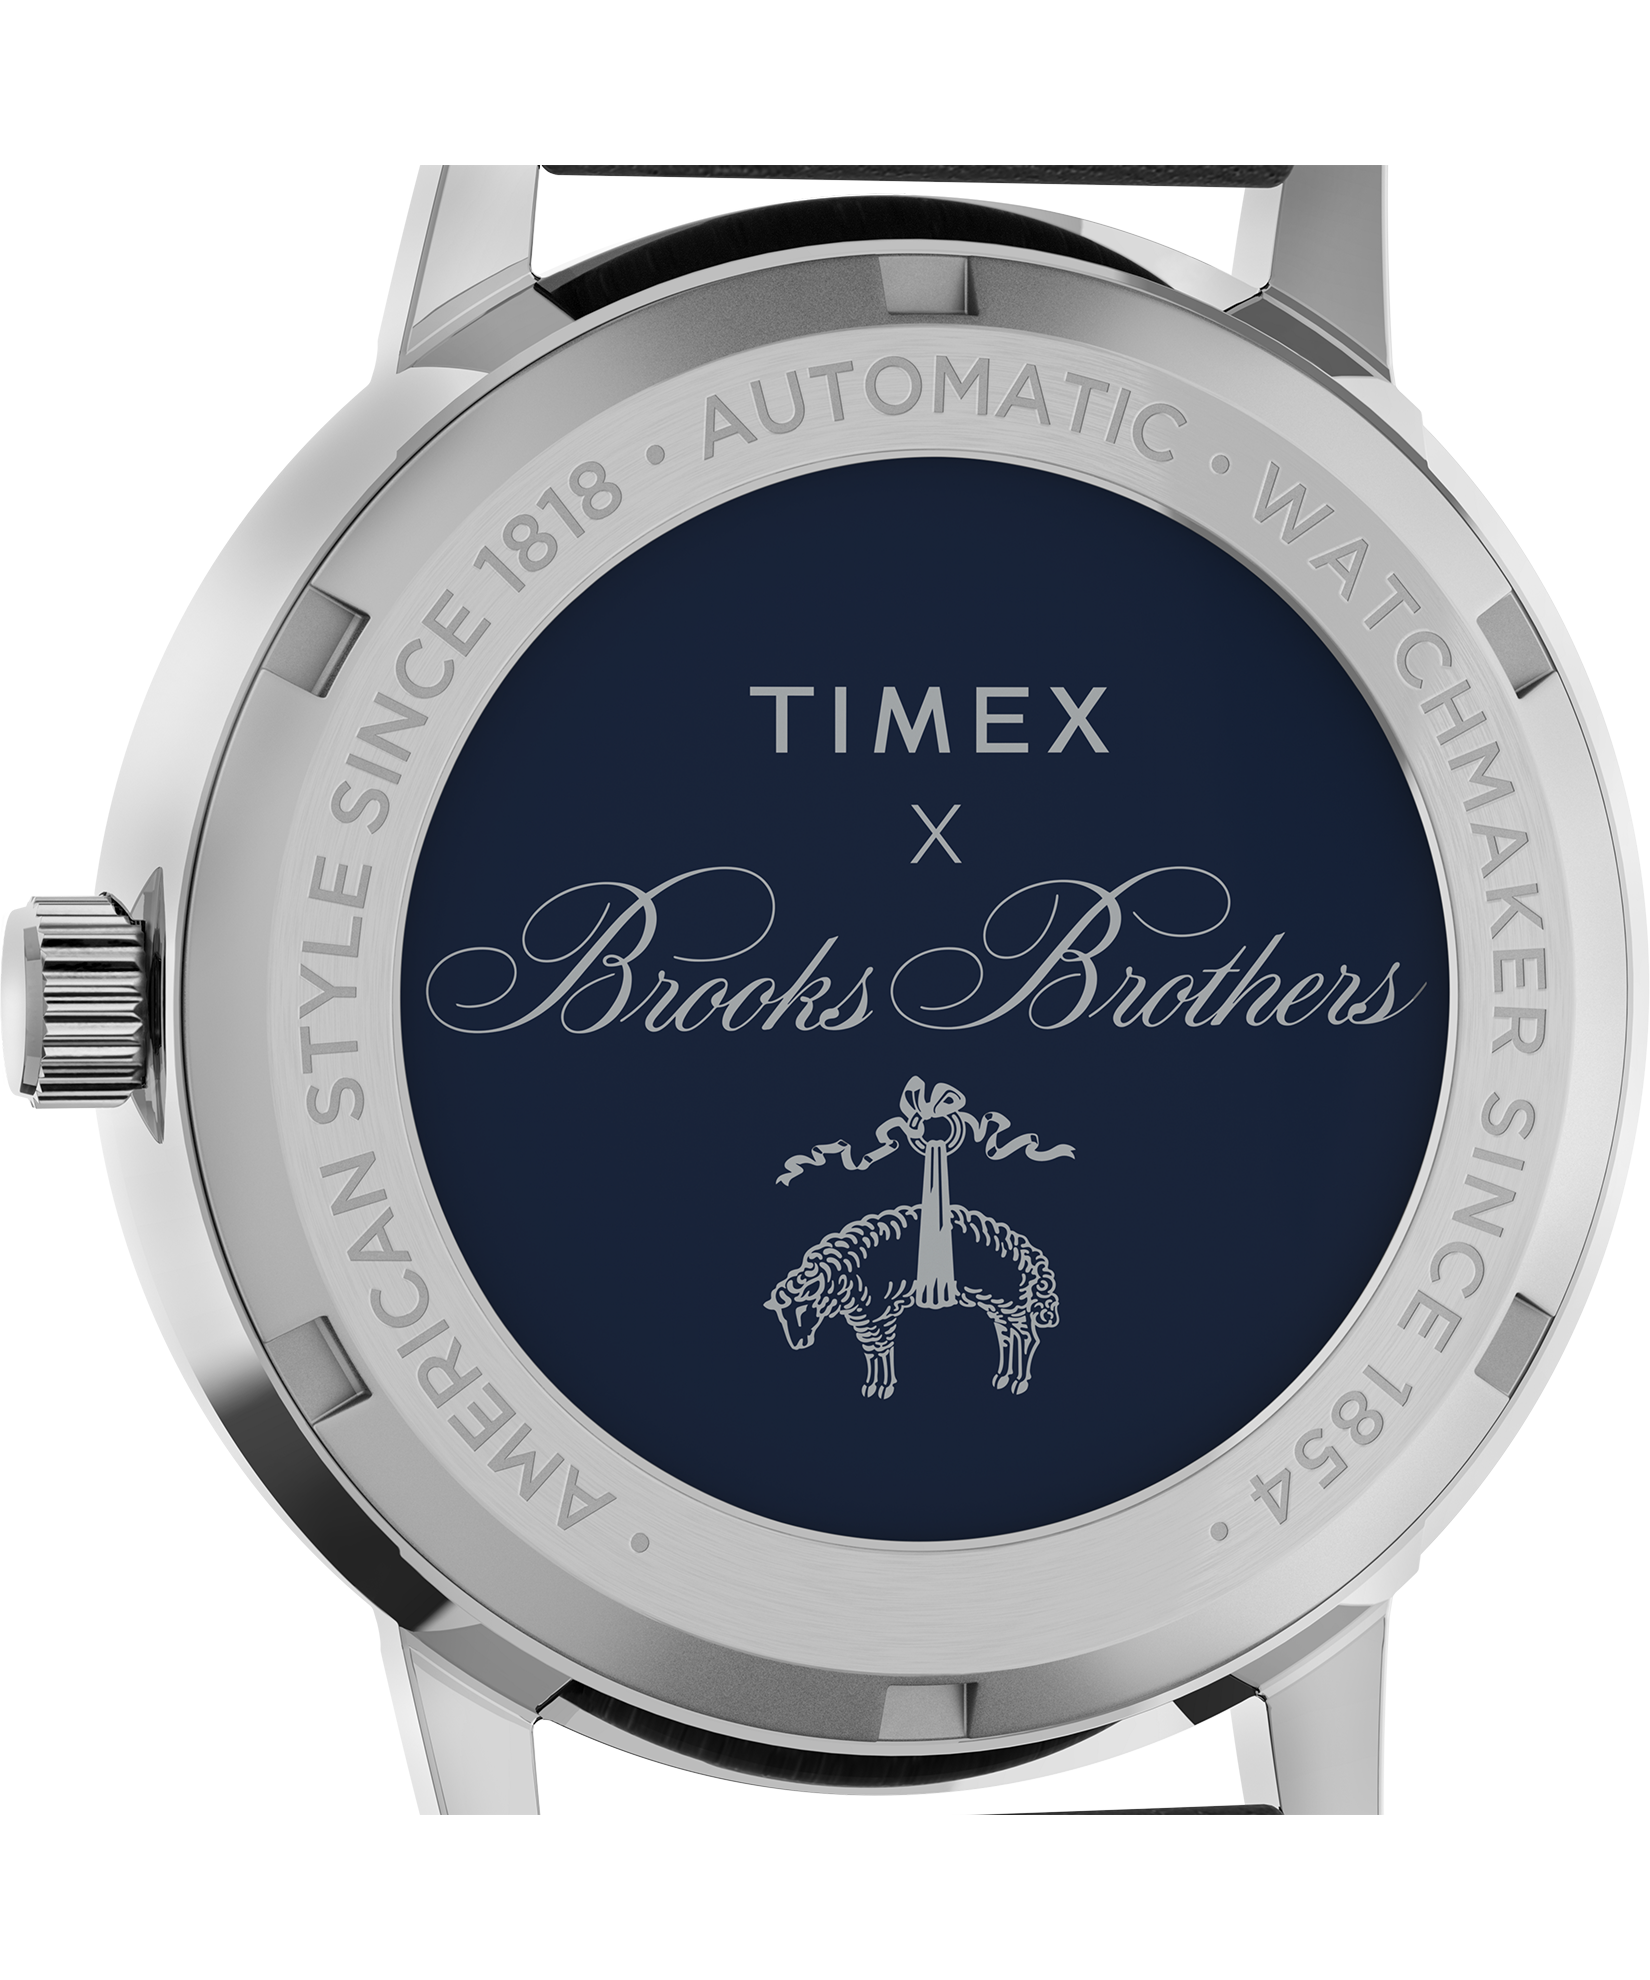 Chronograph Timepiece - Brooks Brothers | Luxury watches, Luxury watches  for men, Watches for men